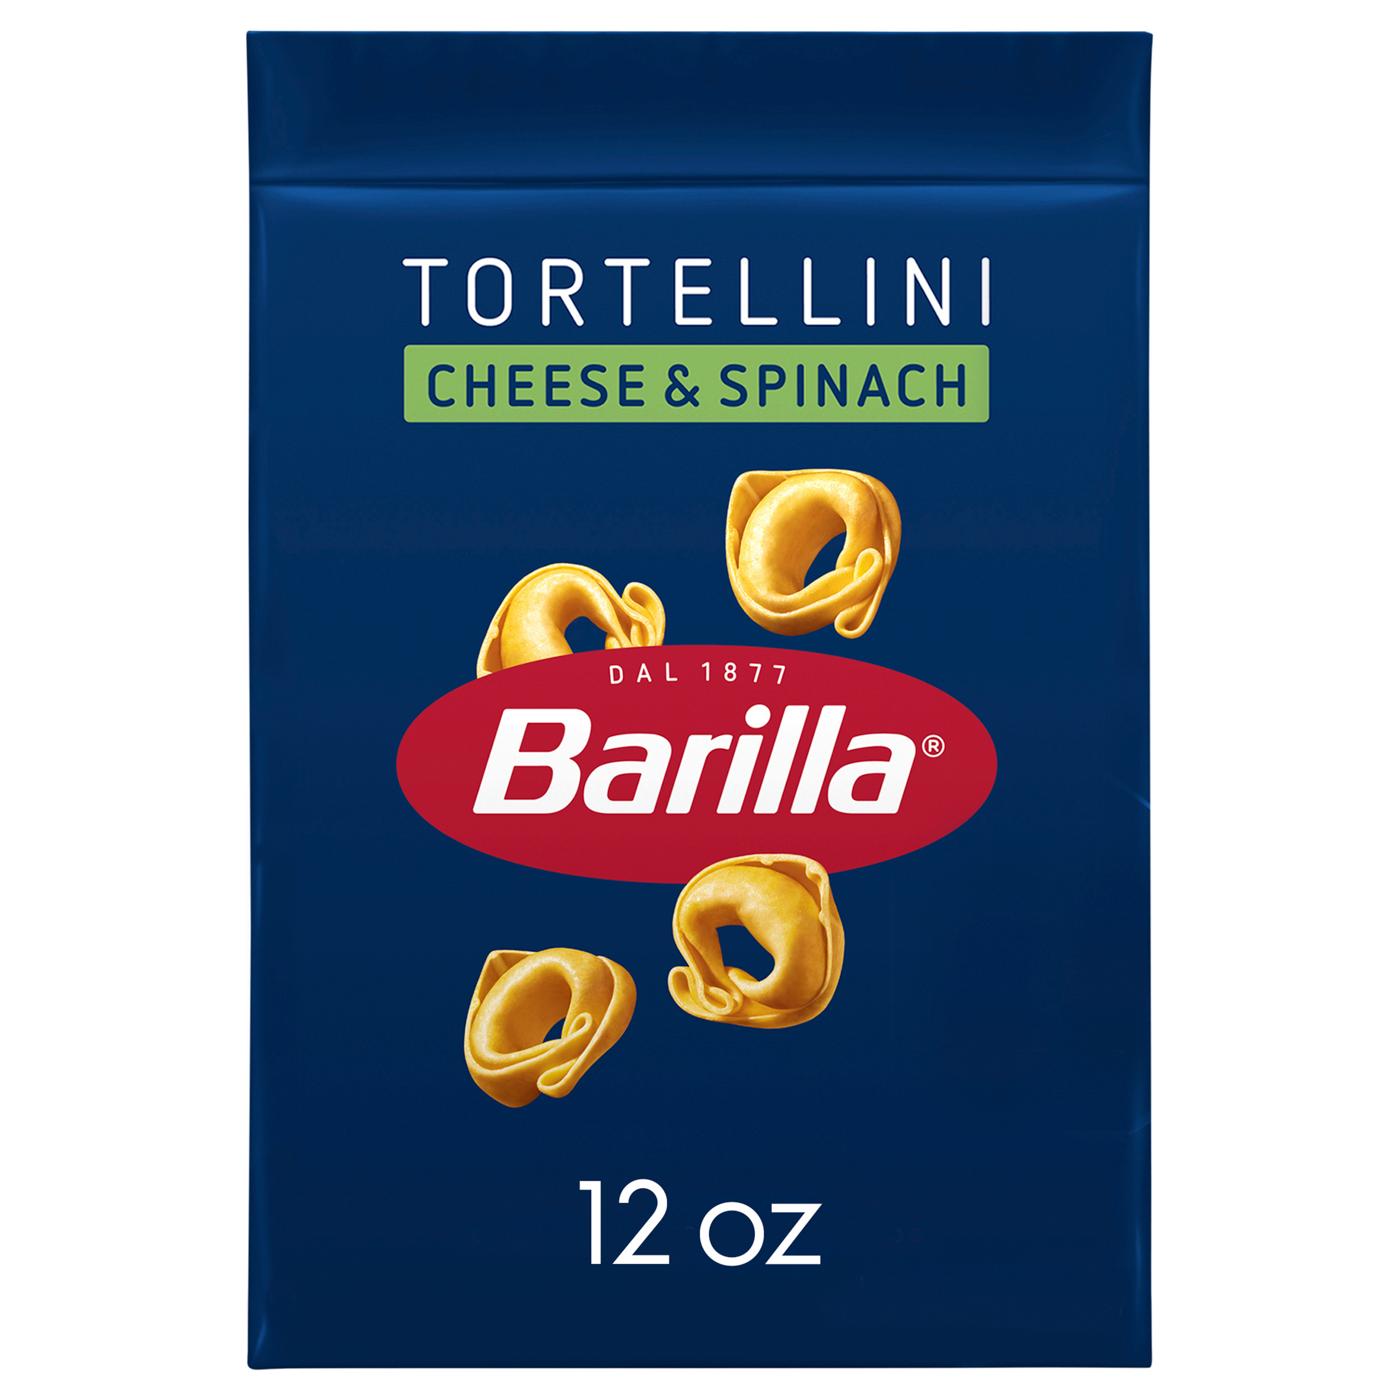 Barilla Cheese & Spinach Tortellini Pasta; image 1 of 7